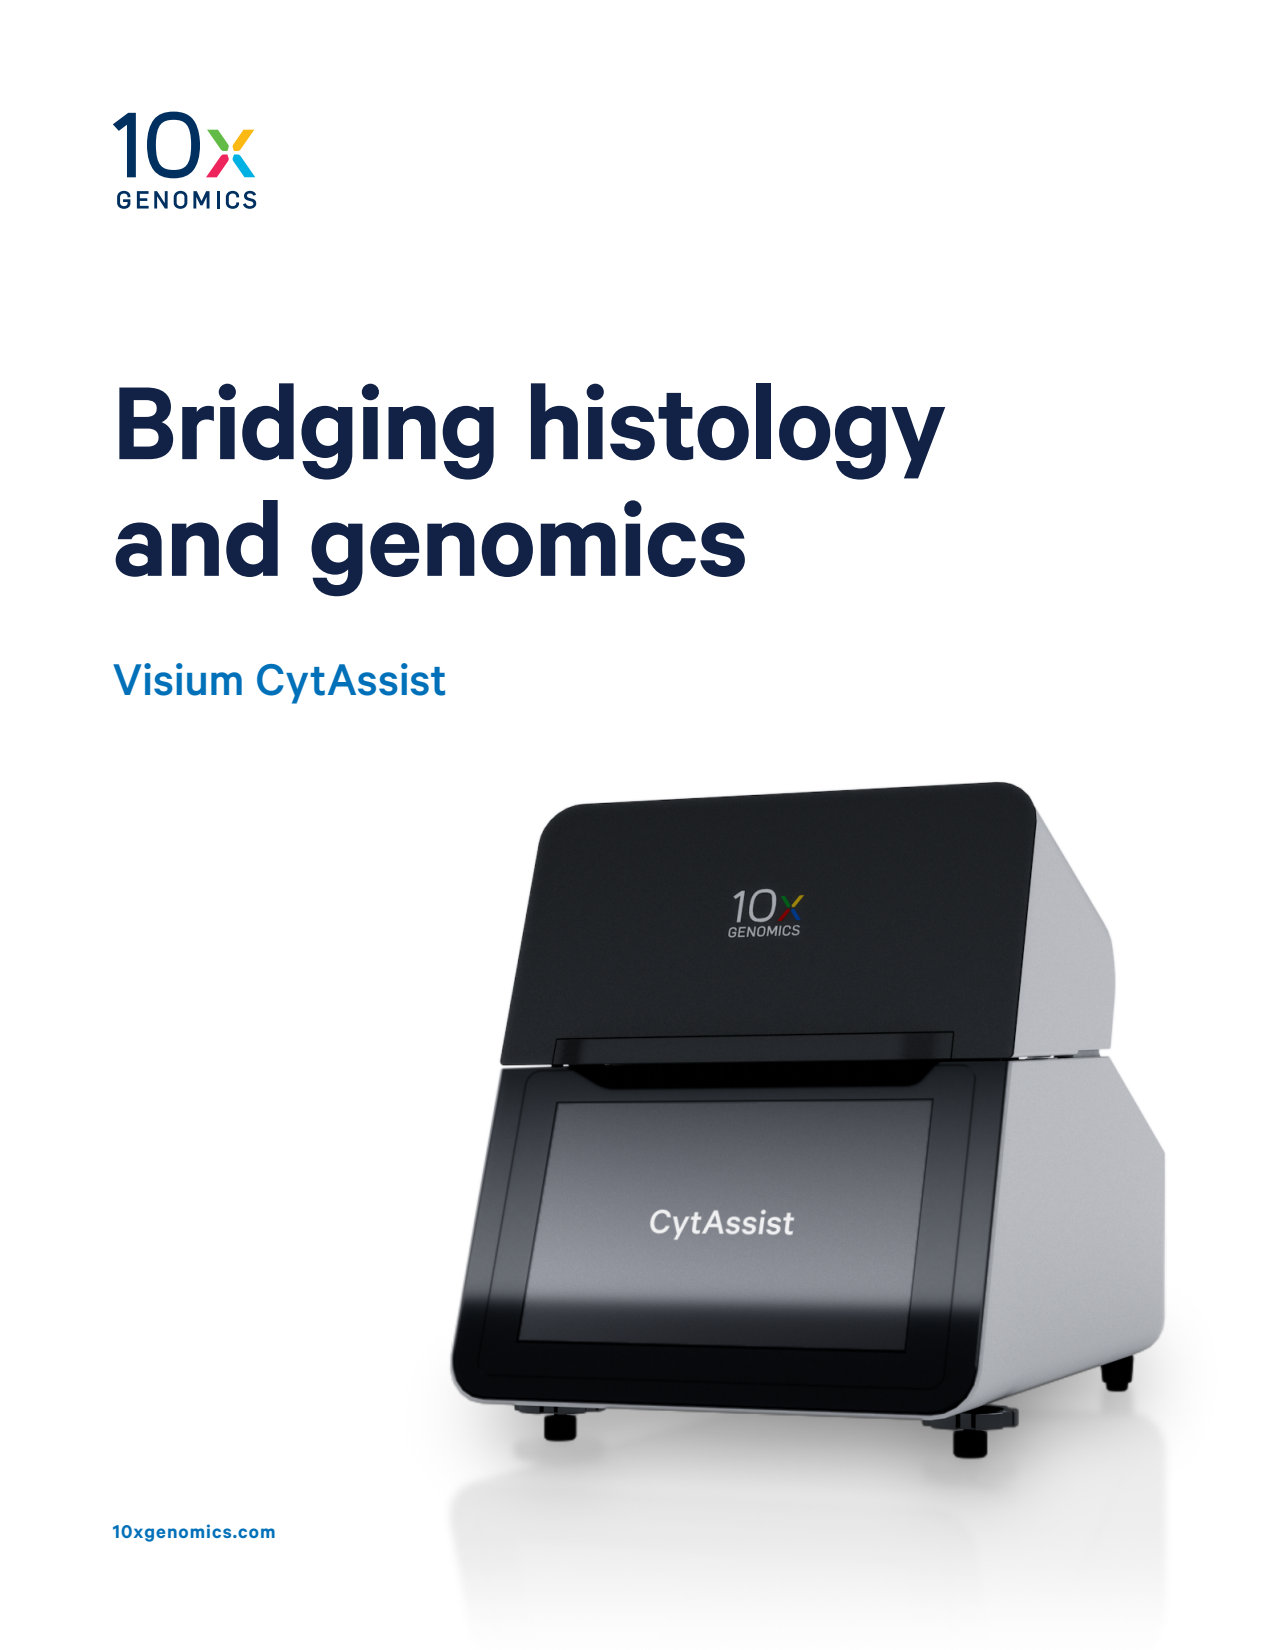 Visium CytAssist Brochure: Bridging histology and genomics